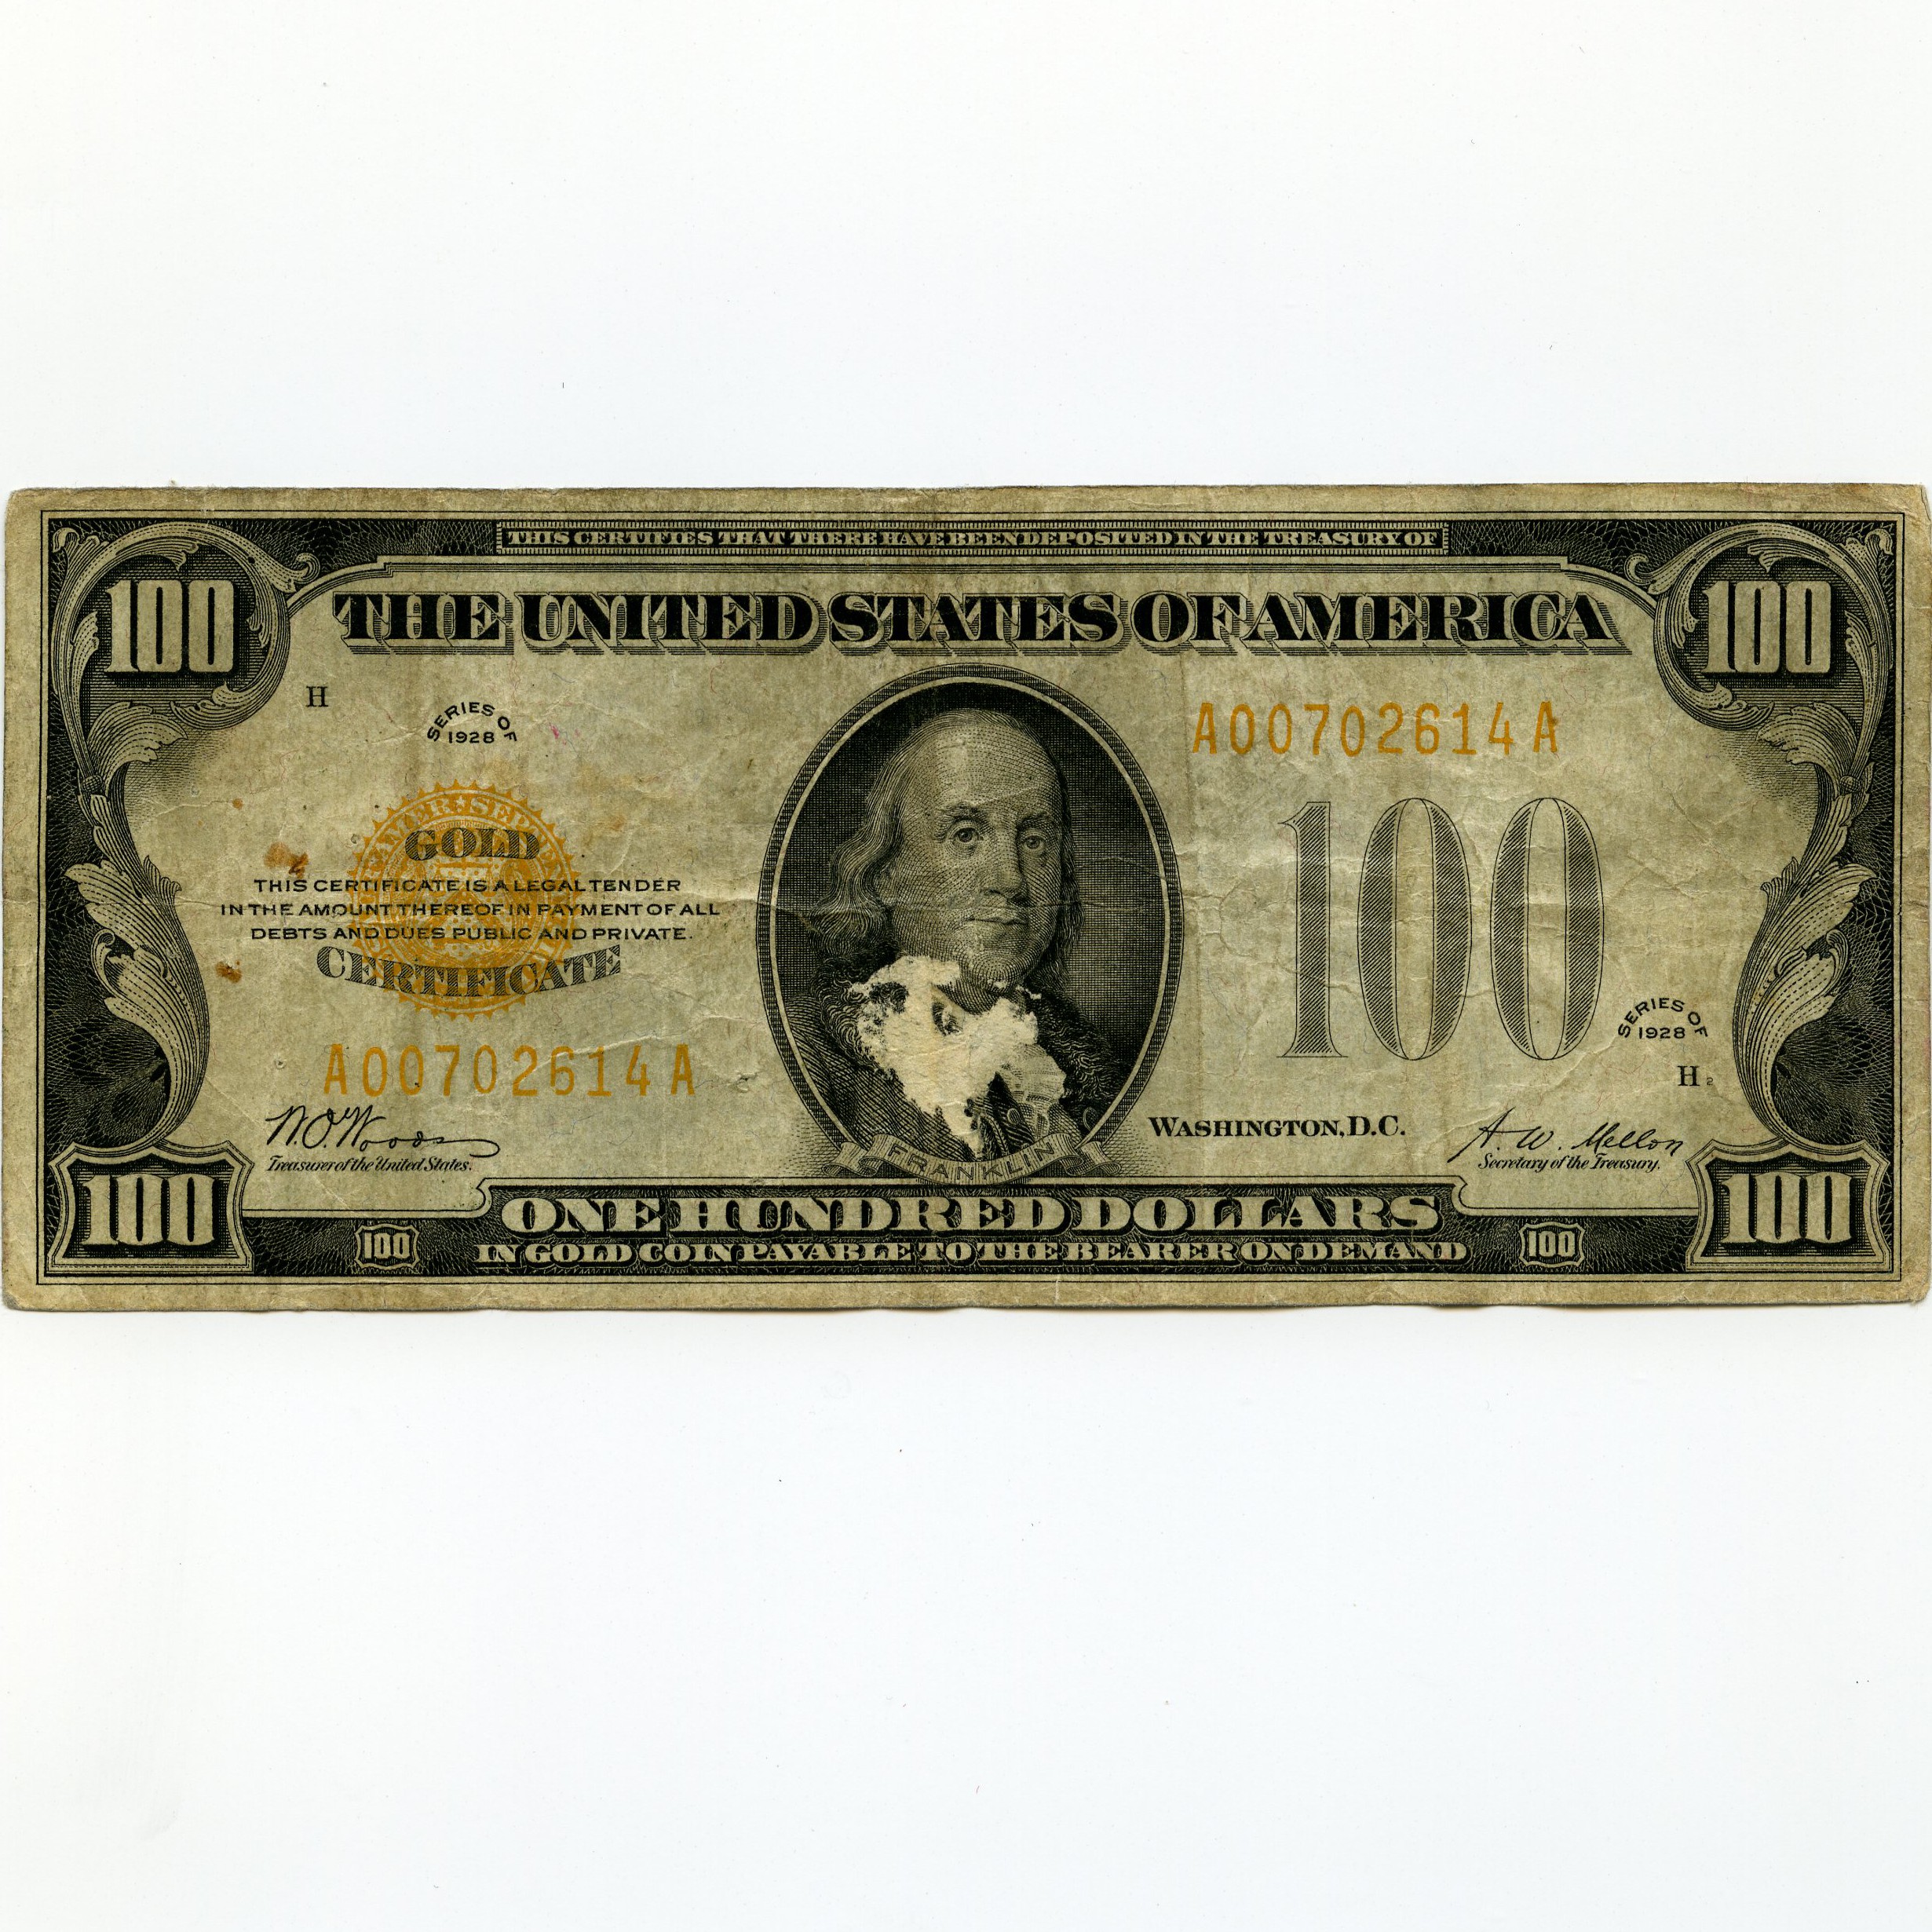 USA - 100 Dollars - A00702614A avers